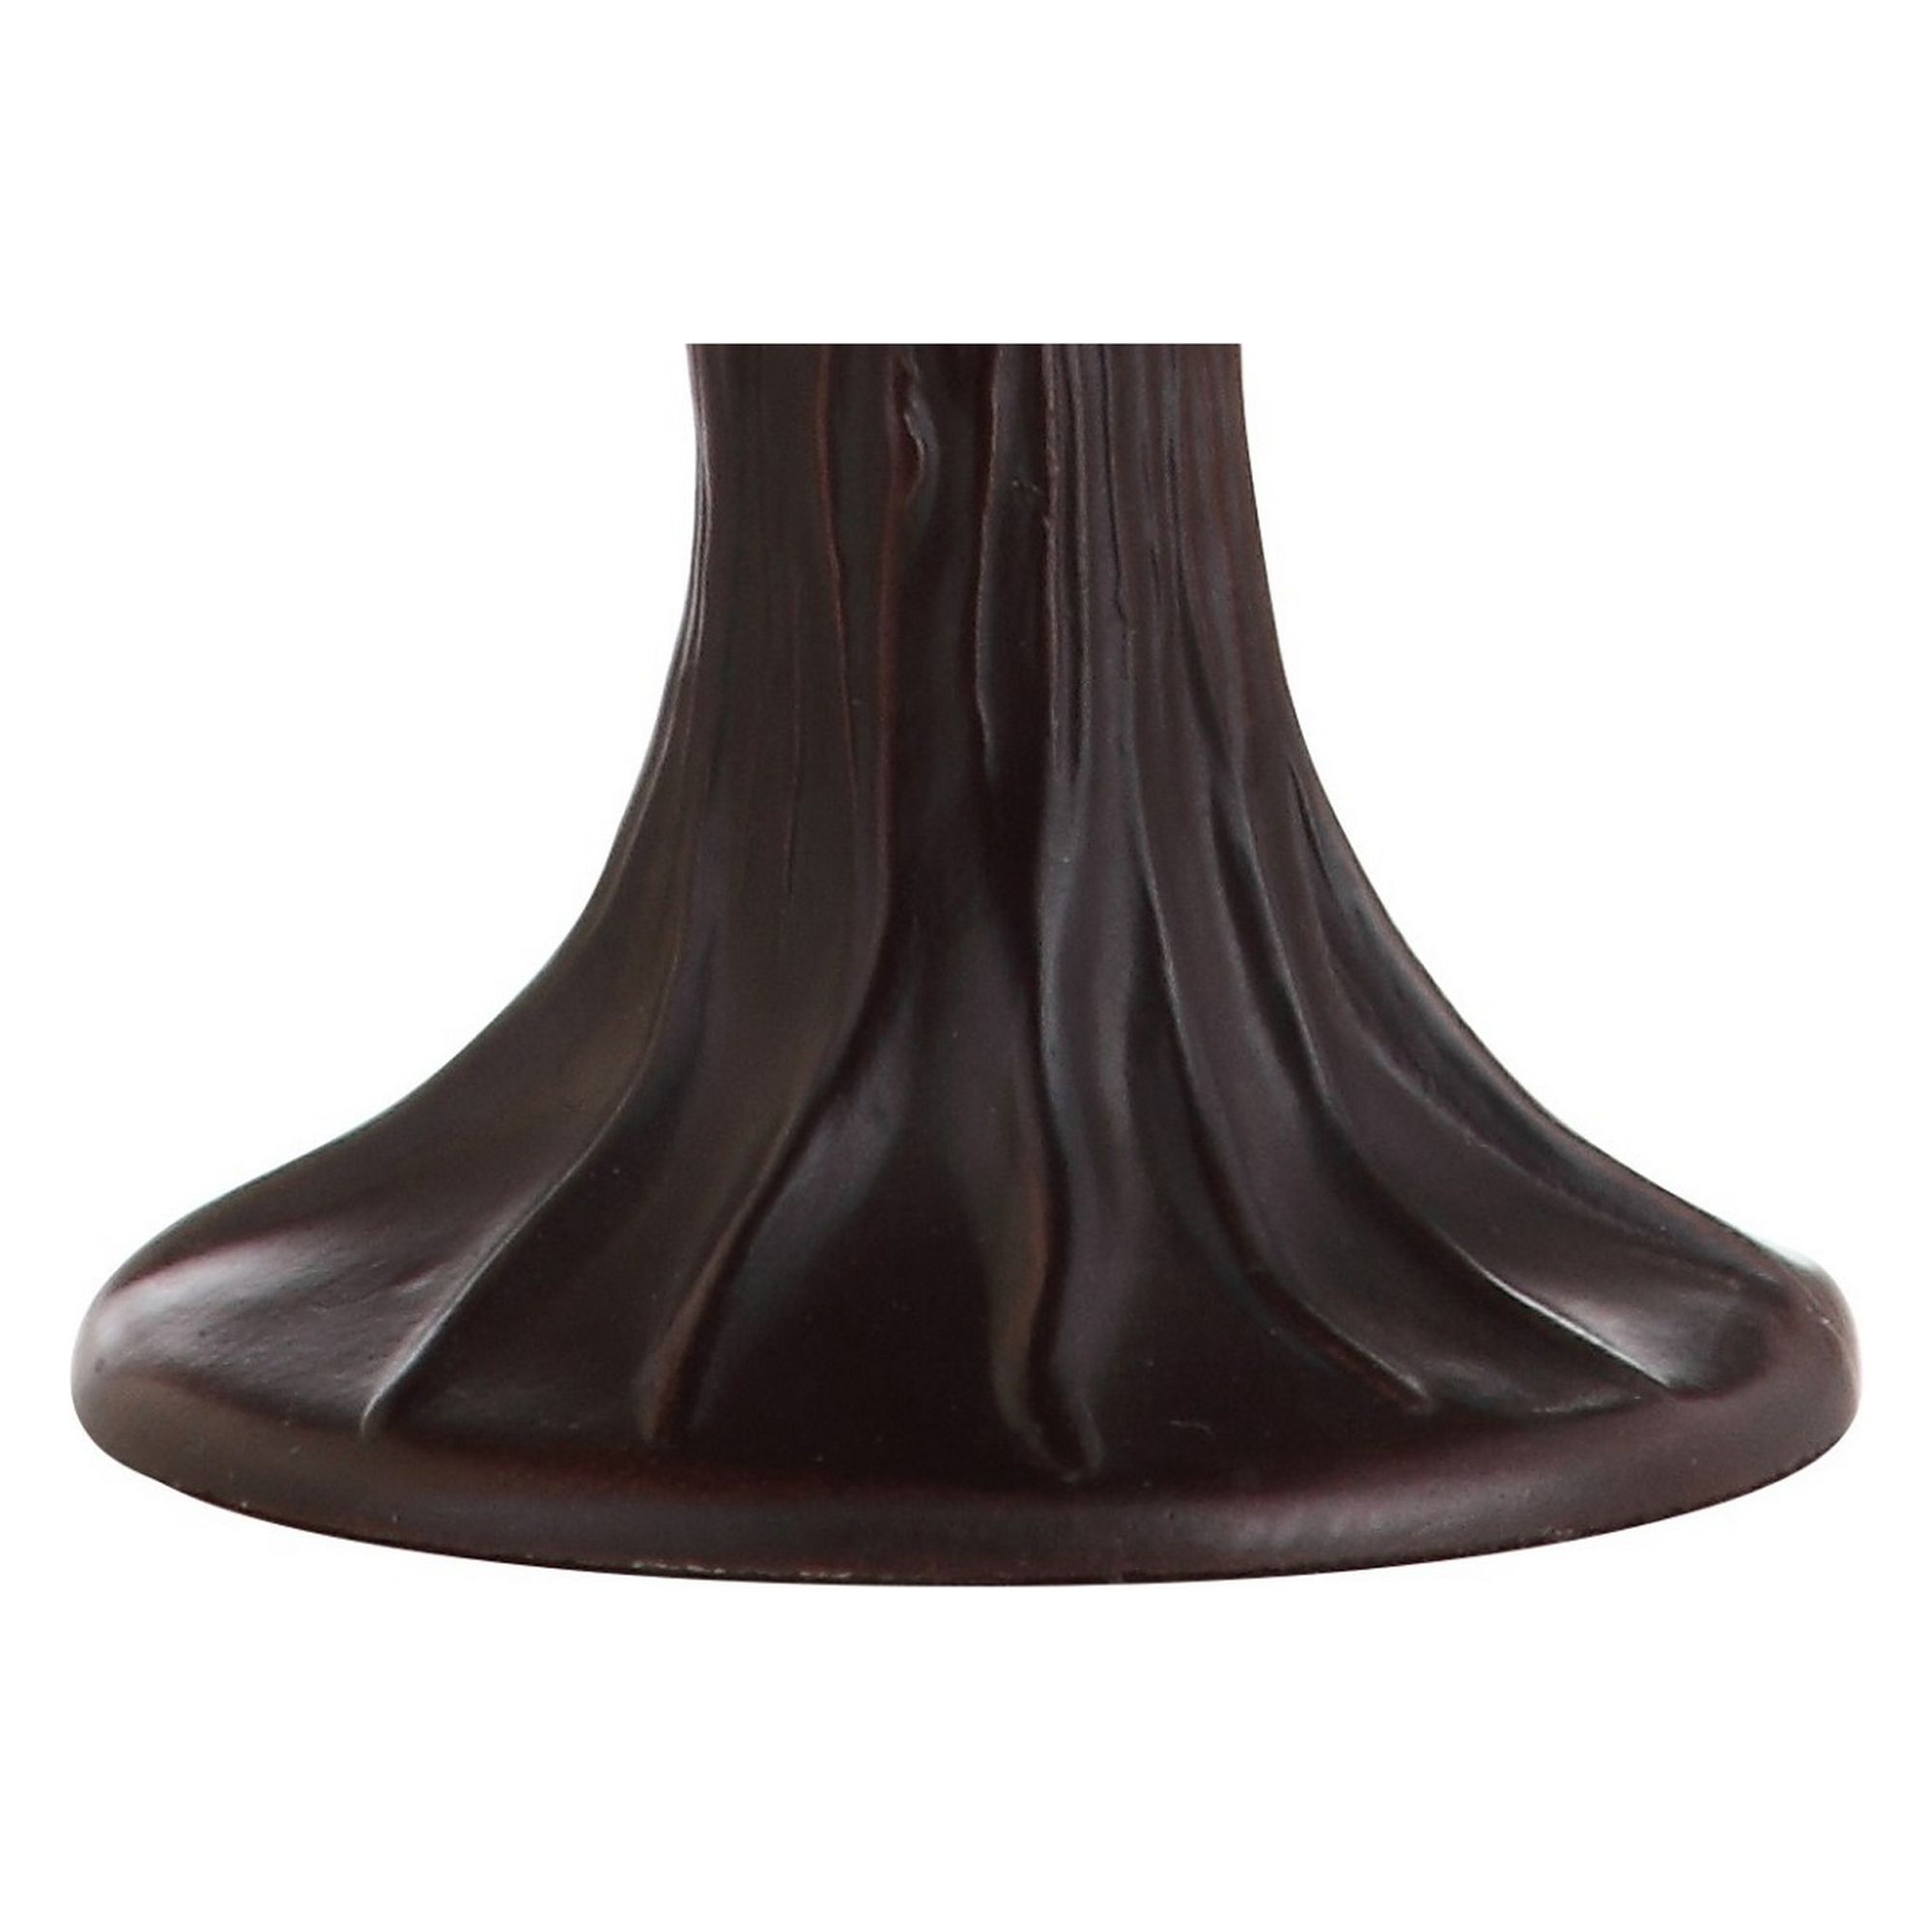 Hummingbird Tiffany-Style 12" LED Table Lamp, Bronze - image 4 of 5